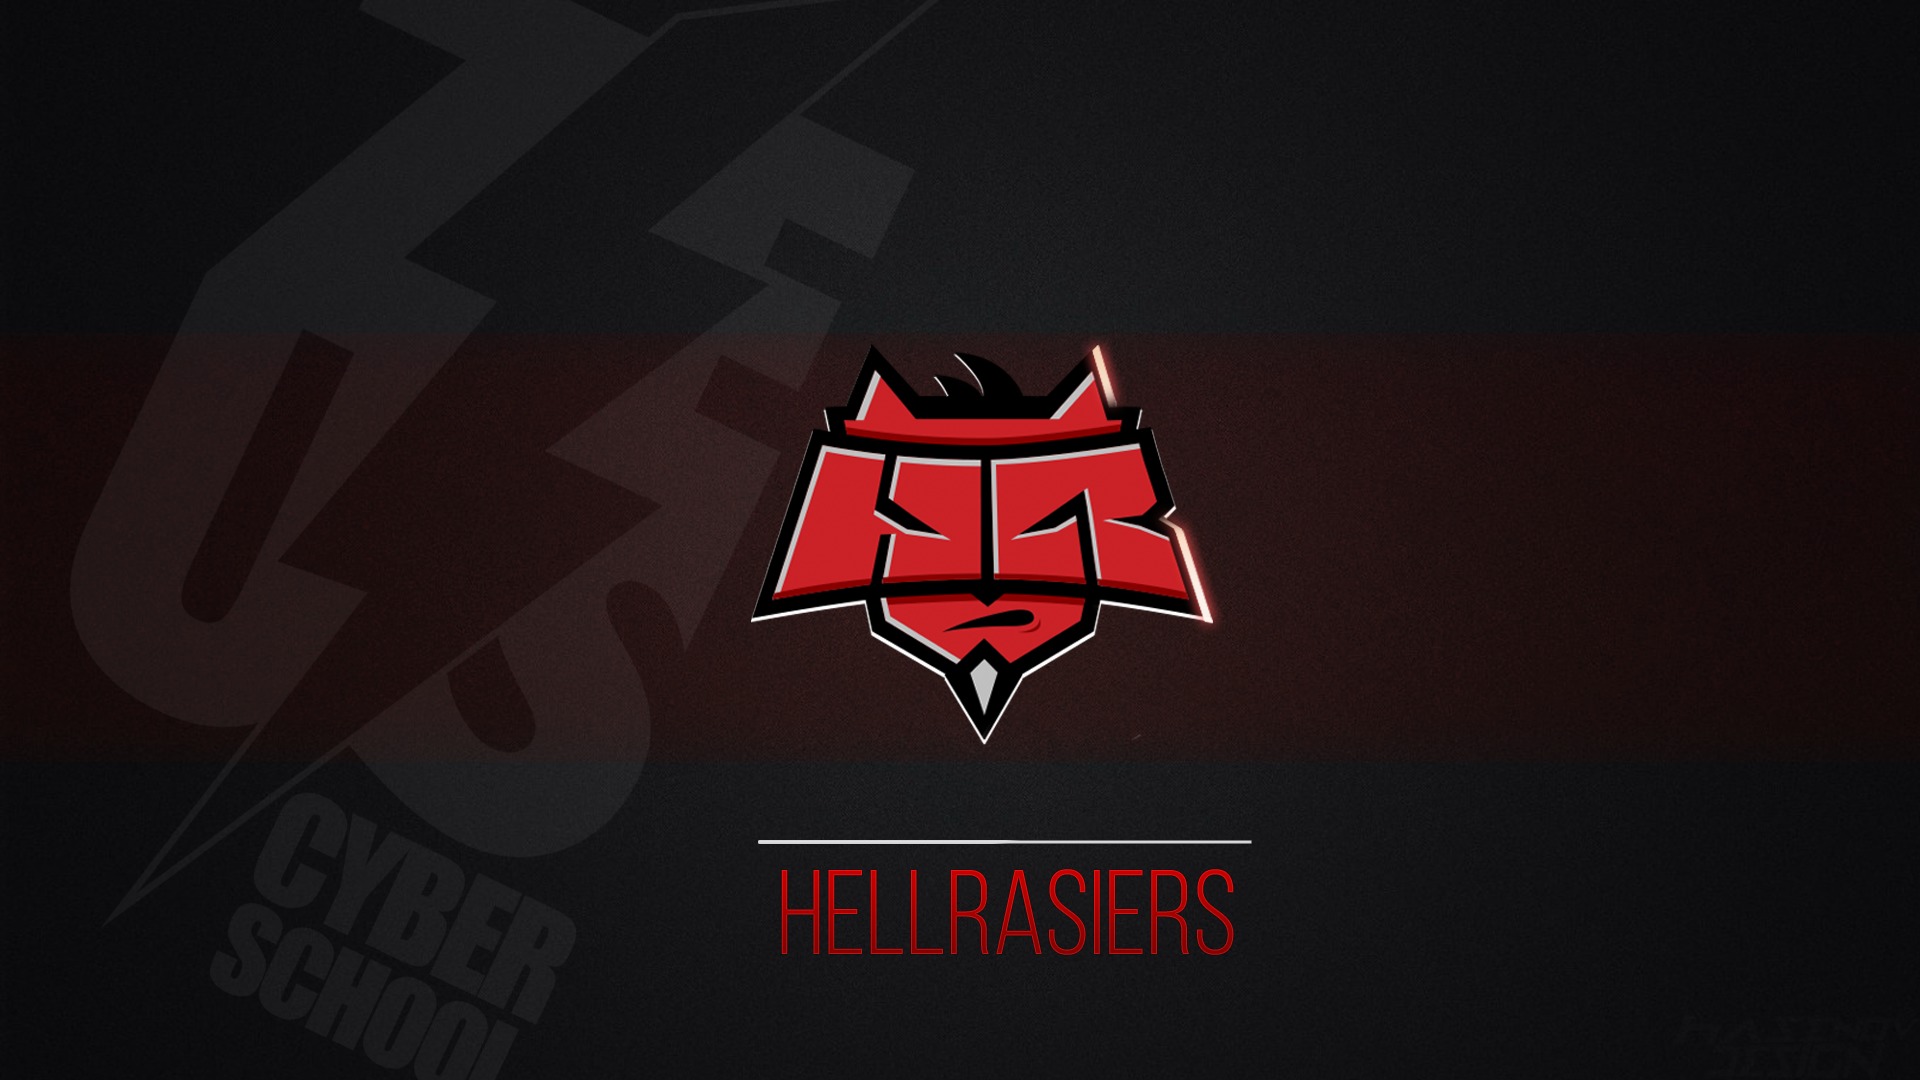 My gaming team. Хелрейзерс КС го. Логотип хелрейзерс. Логотип команды Hellraisers. Hellraiser киберспорт.